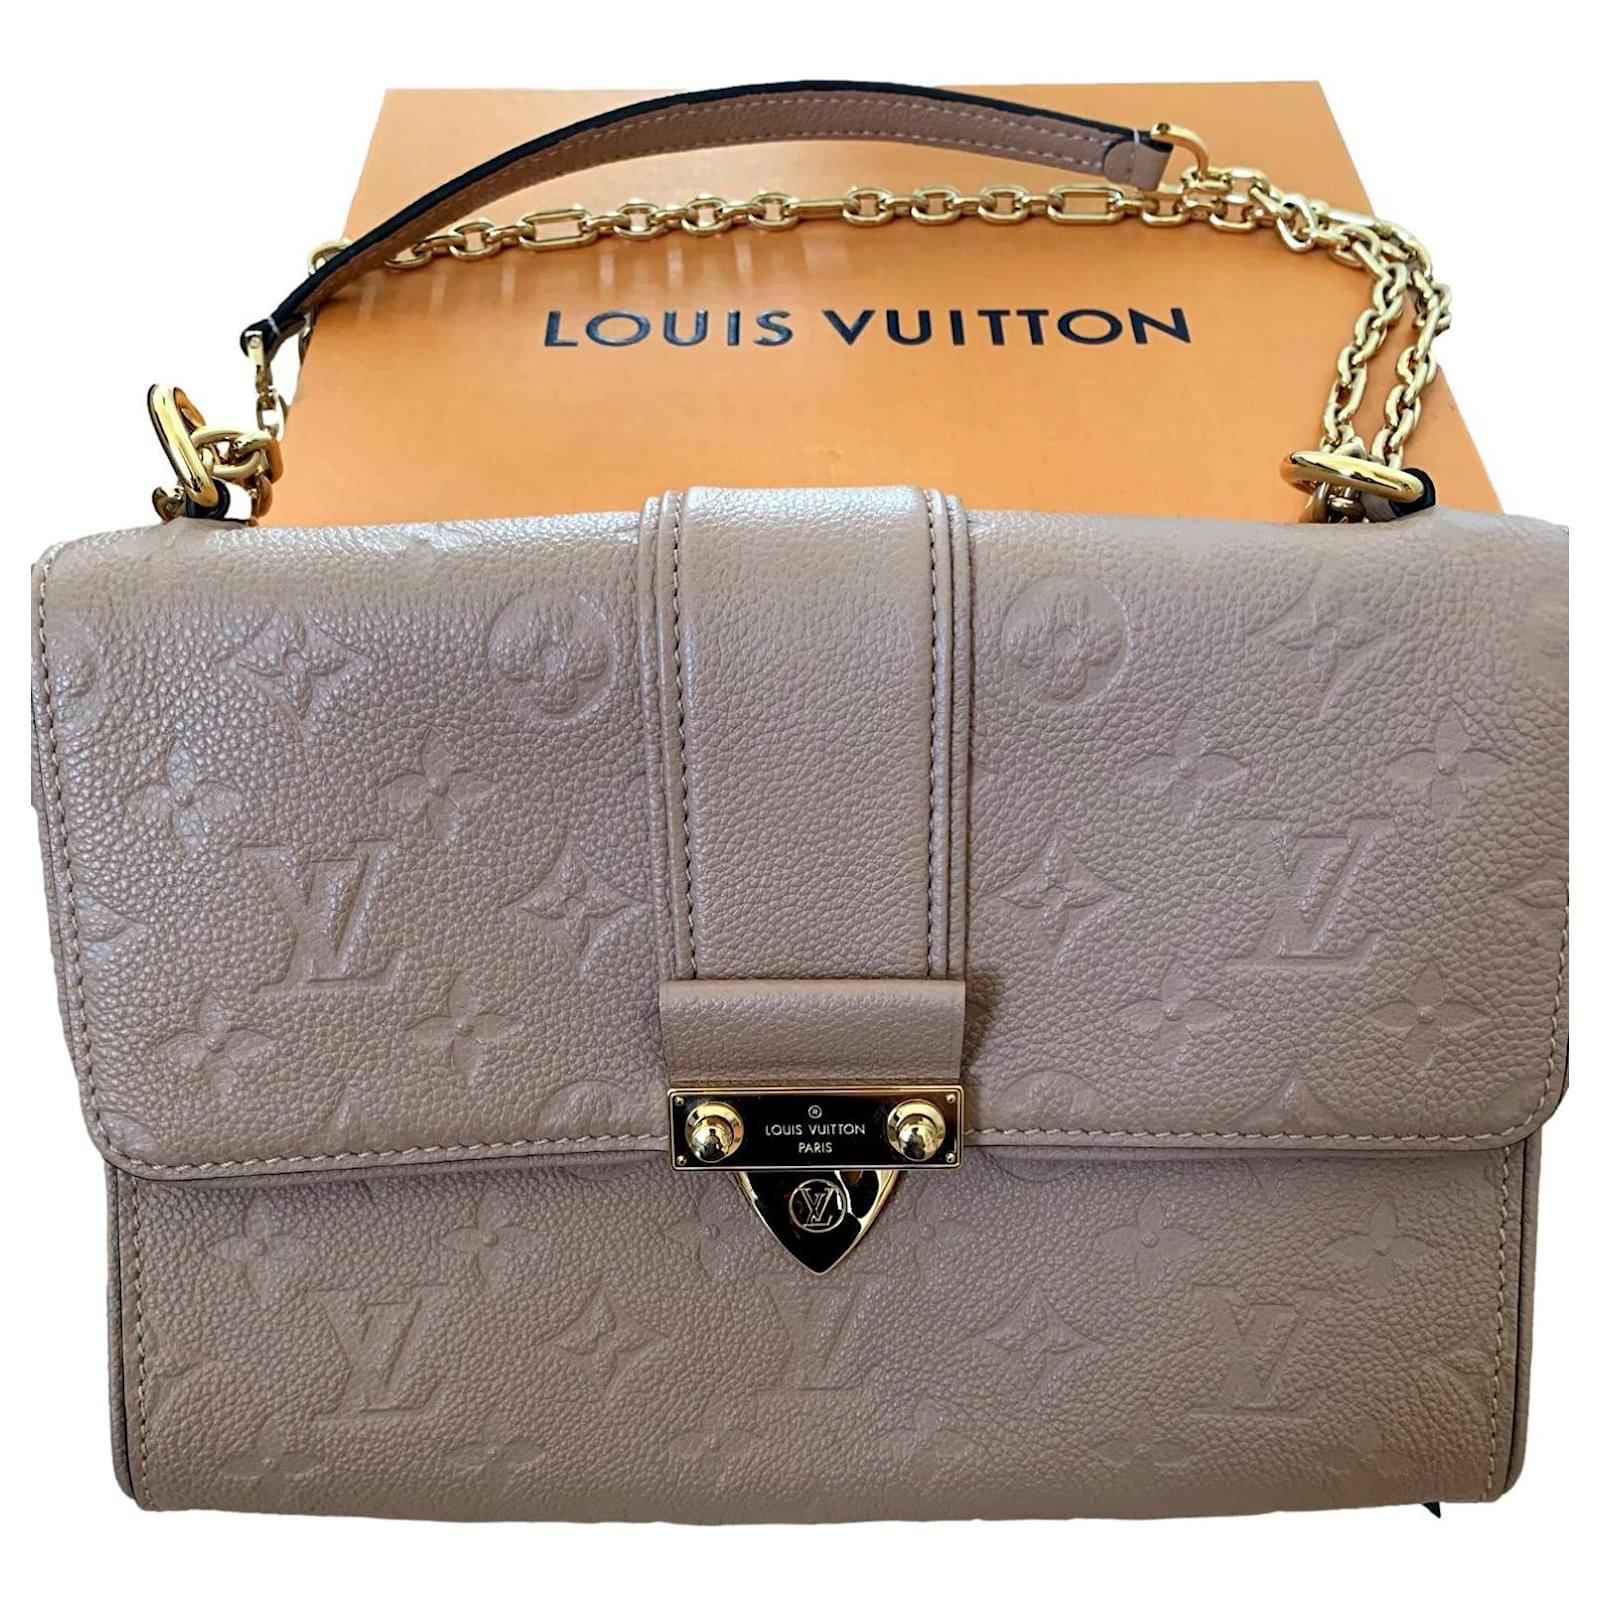 Louis Vuitton Wallets for Men - Poshmark